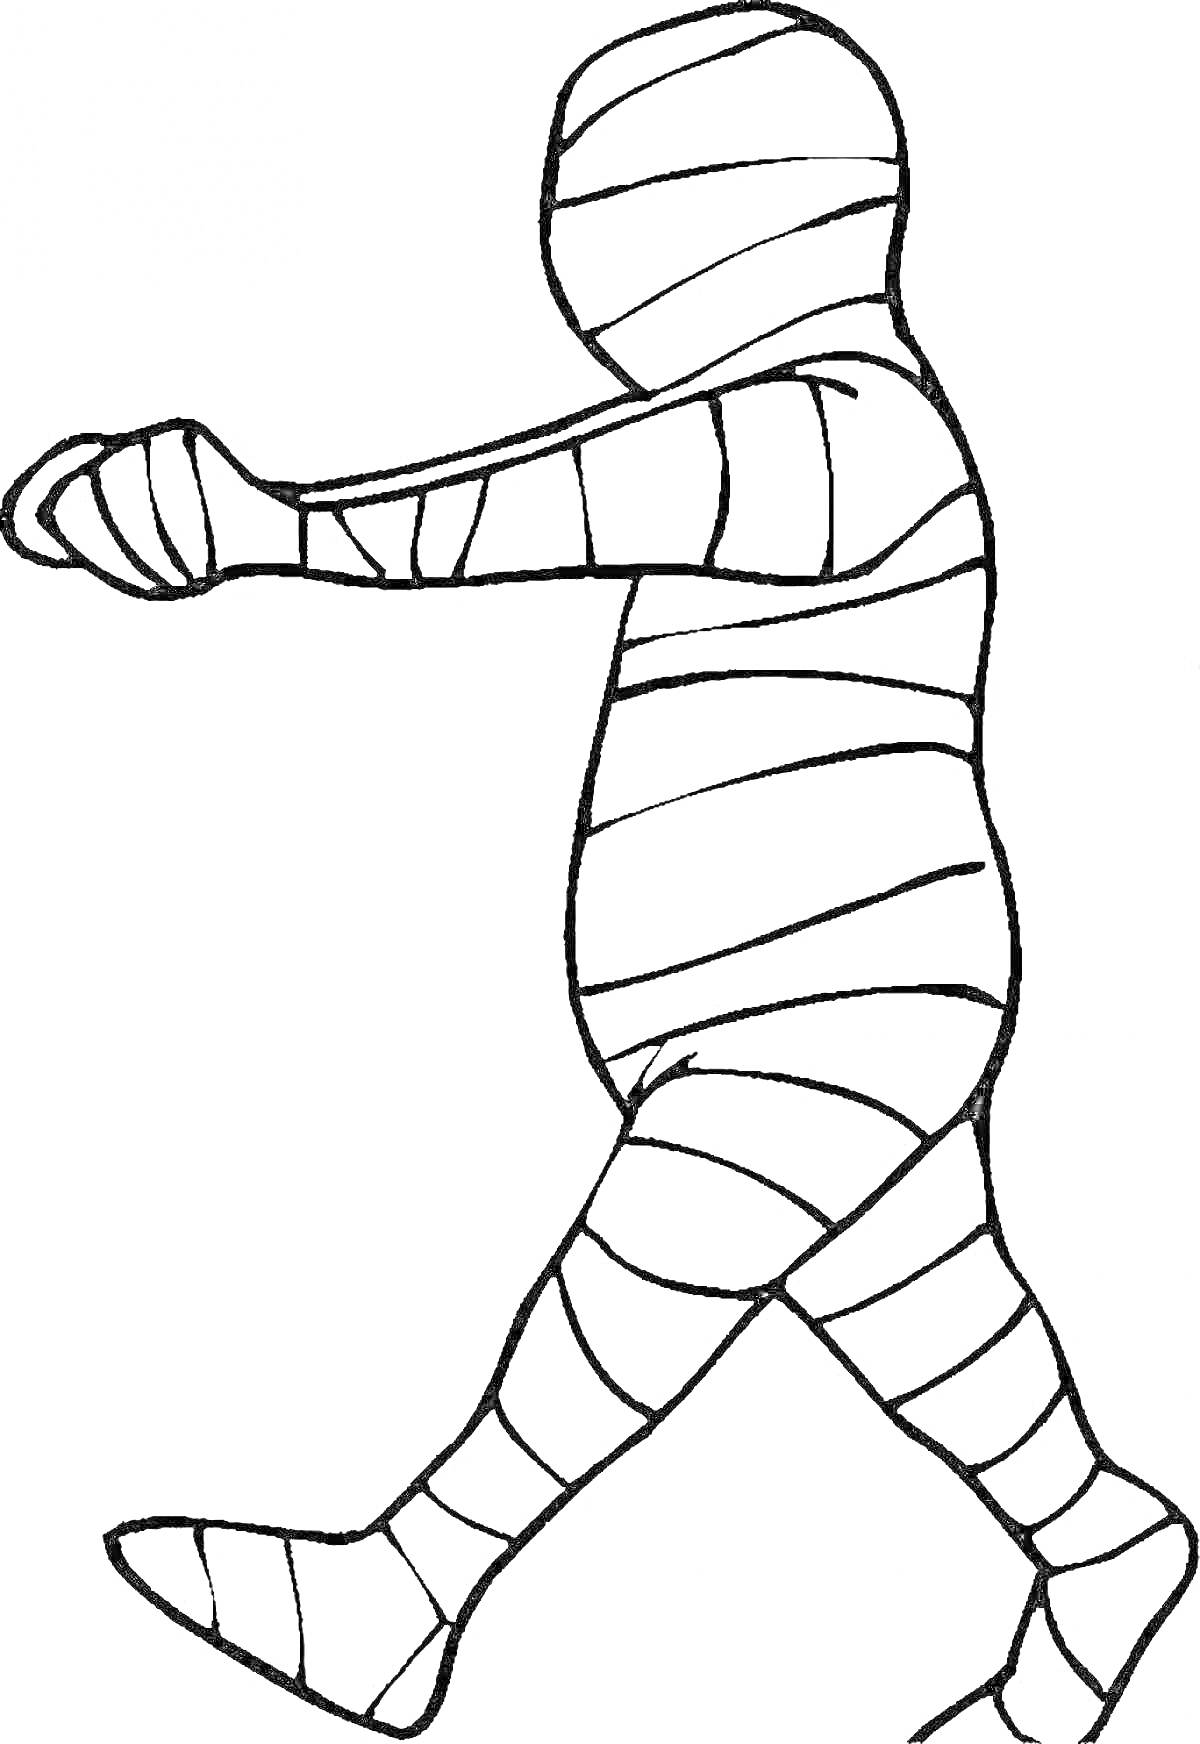 Раскраска Мумия в бинтах с вытянутыми руками